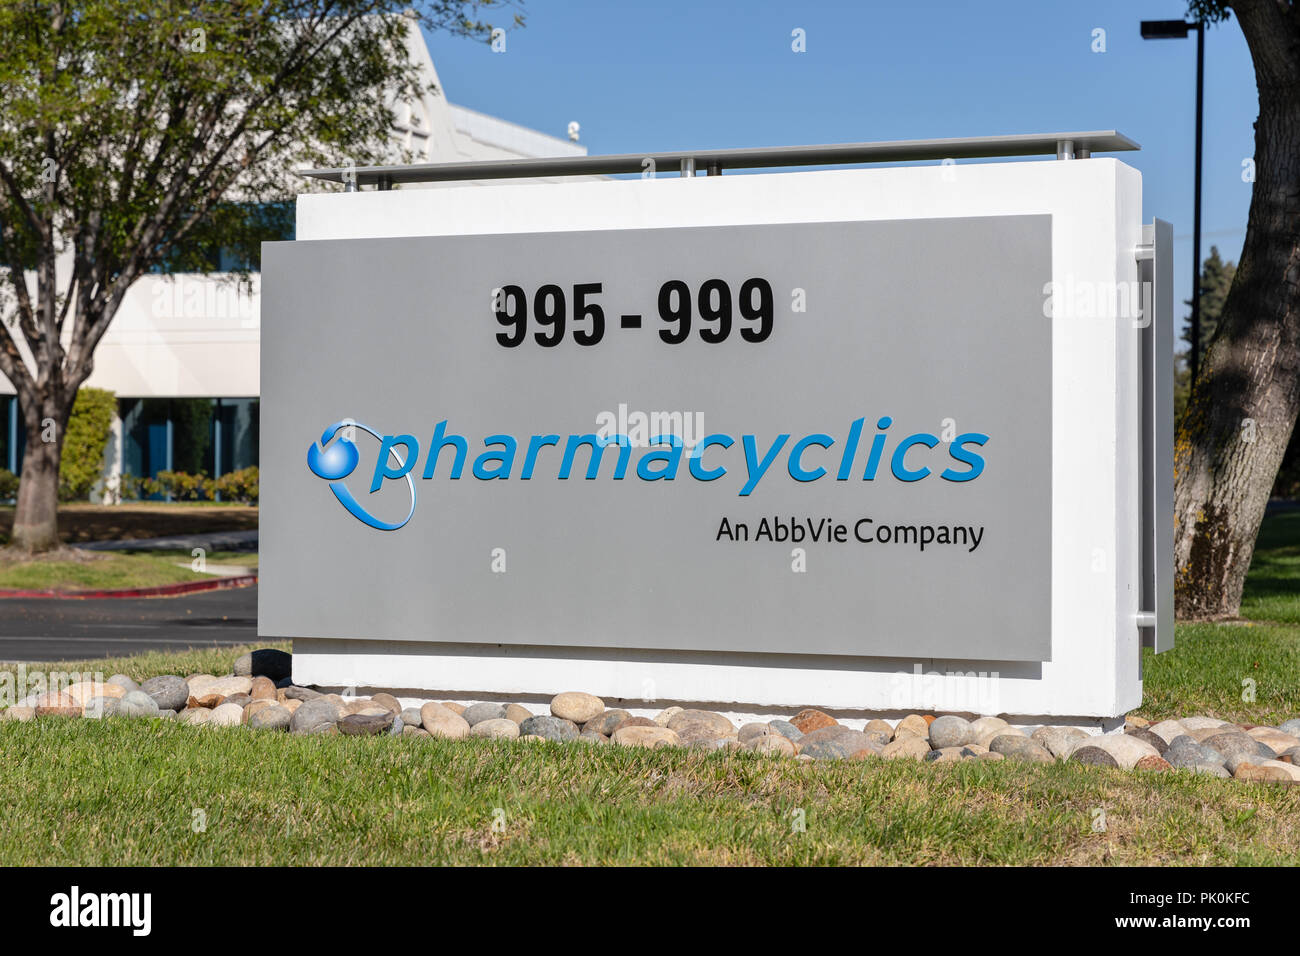 Pharmacyclics - Una società AbbVie; Sunnyvale, California Foto Stock